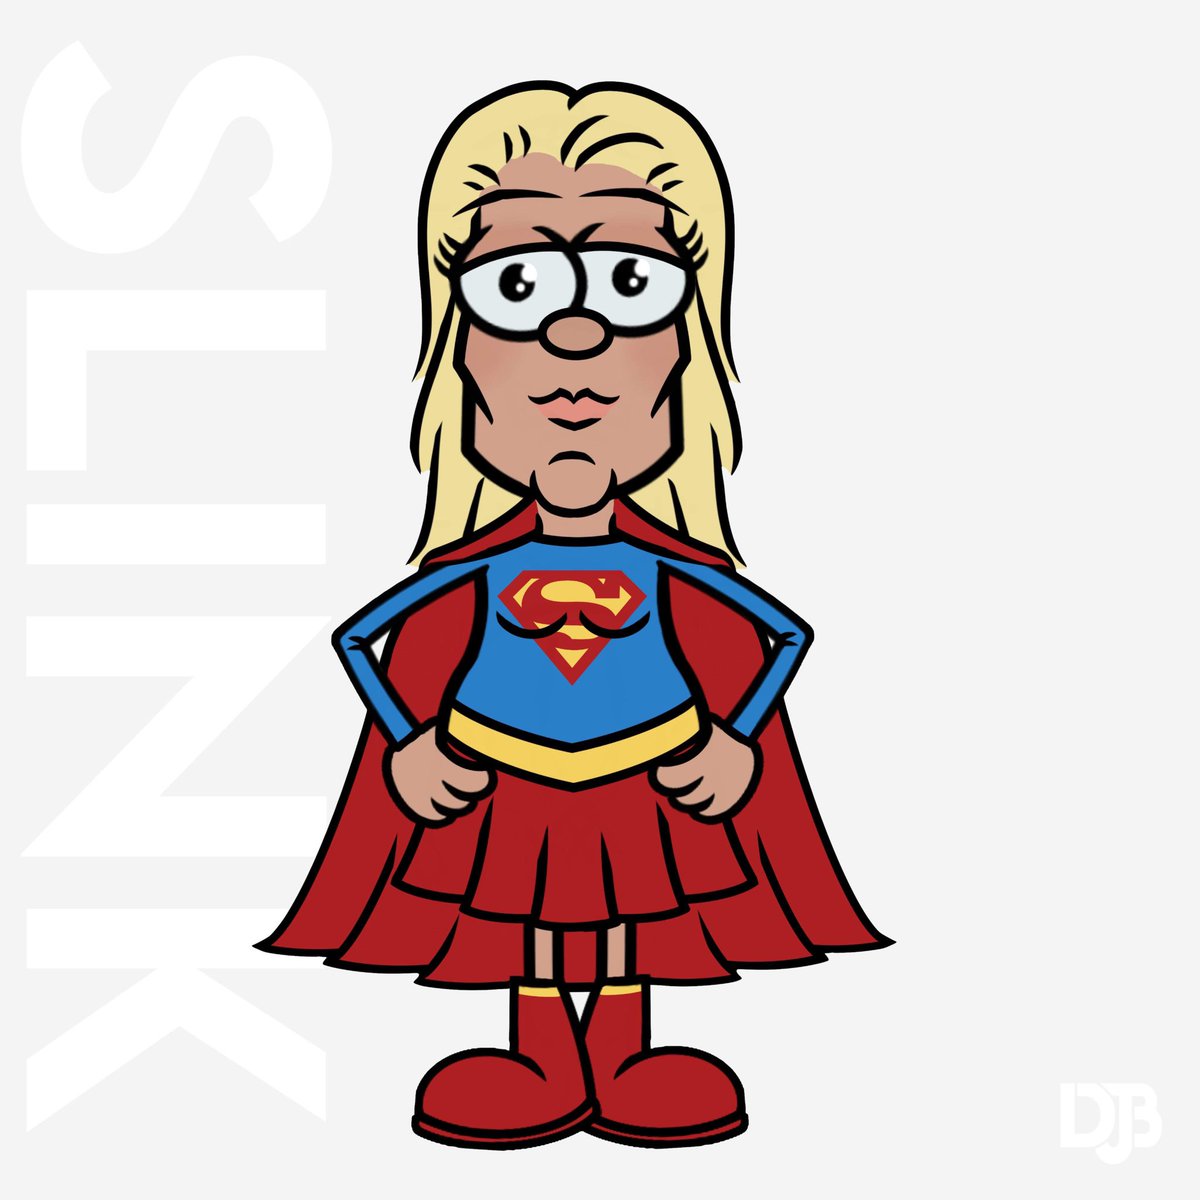 Supergirl got SLINKd #supergirl #supergirlthemovie #karadanvers #karazorel #helenslater #superman #dccomics #superheroes #slink #slinkd #djbu #artistofinstagram #artwork #artist #characterdesign